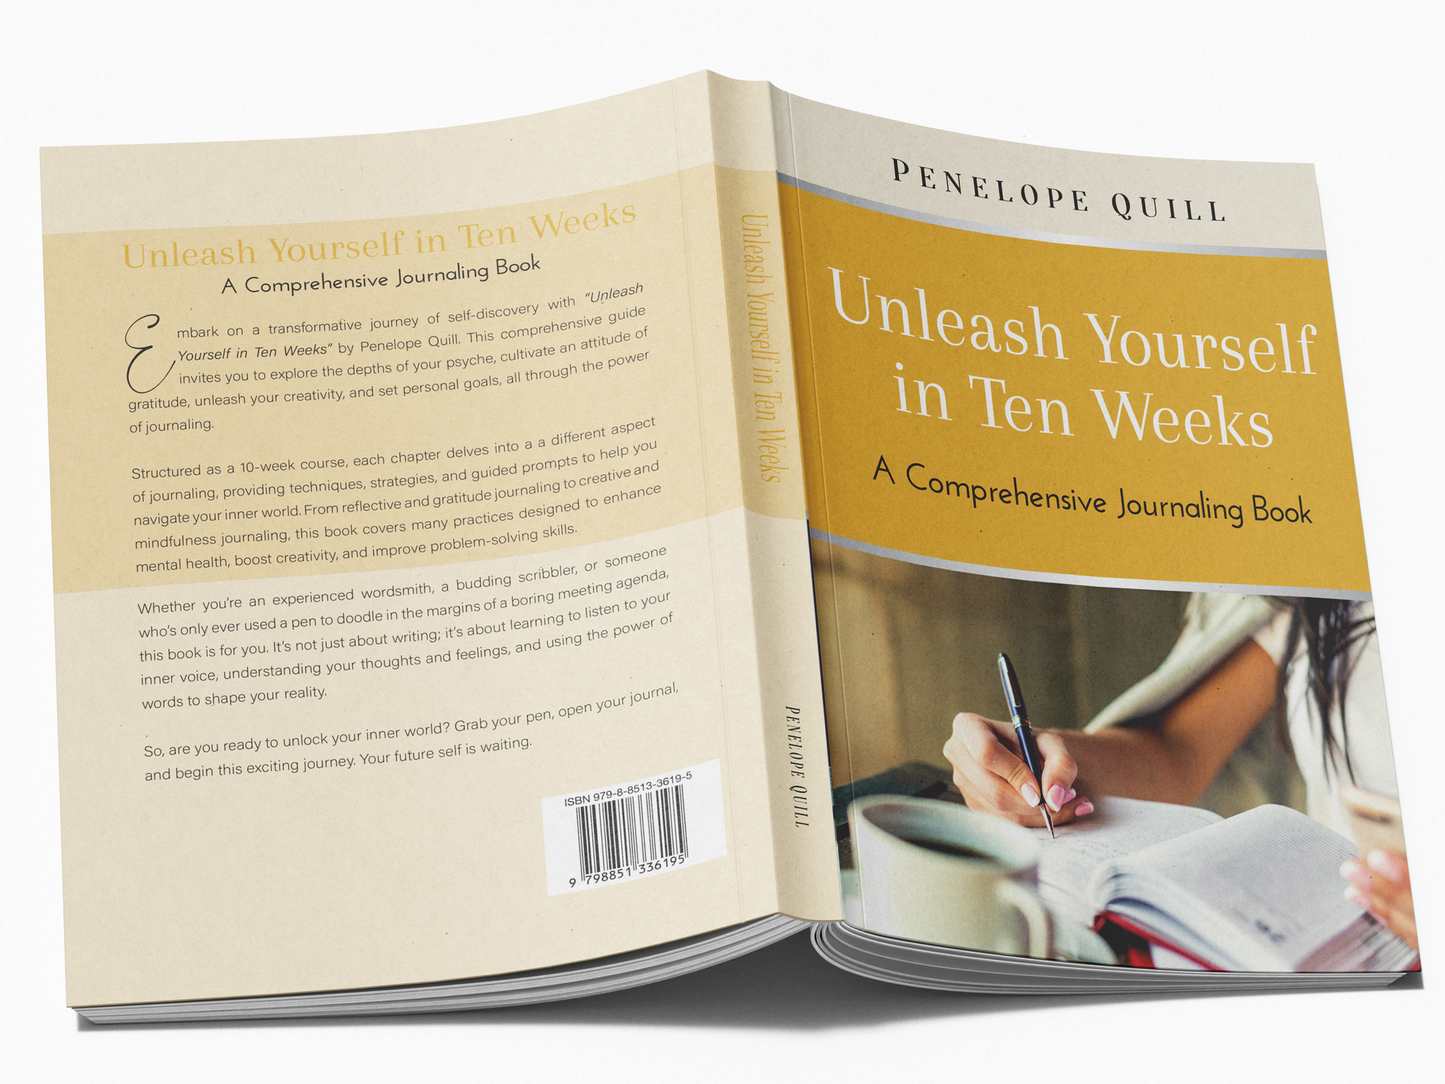 Unleash Yourself in Ten Weeks: A Comprehensive Journaling Book [Paperback]